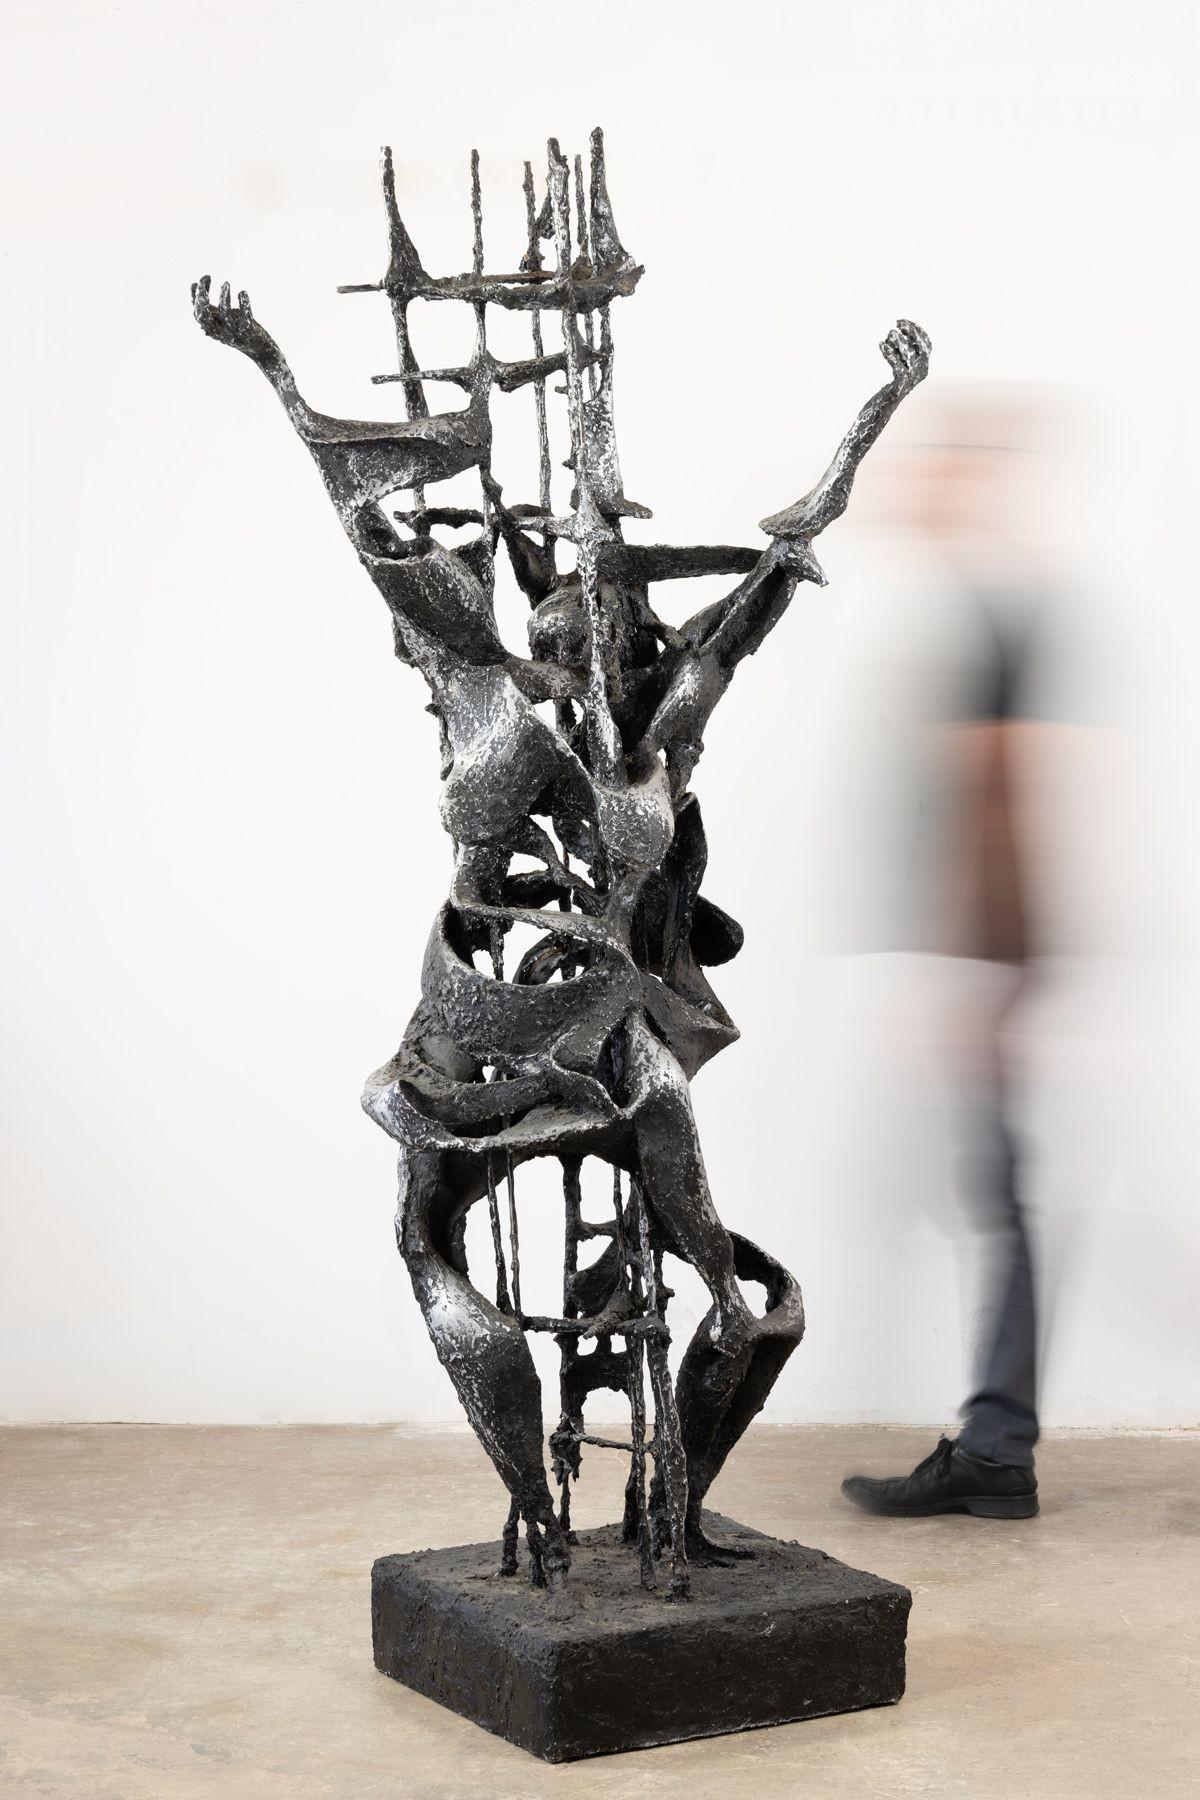 Brutalist abstract sculpture in steel and aluminum by renowned Israeli sculptor Bert Schwartz titled 